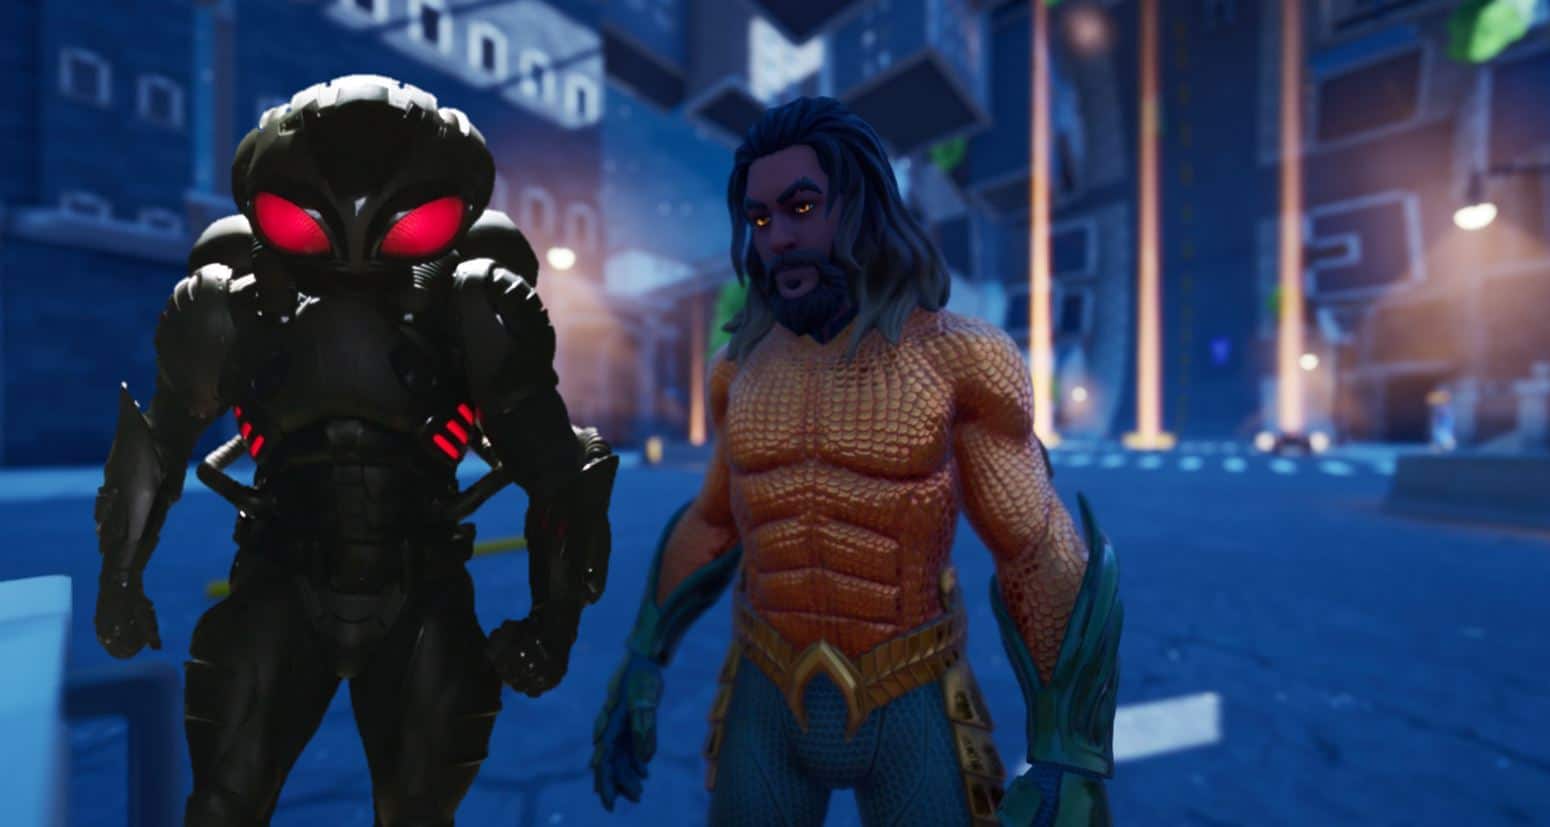 Black Manta Aquaman Villain Fortnite Item Shop Skin Leak - Fortnite Insider